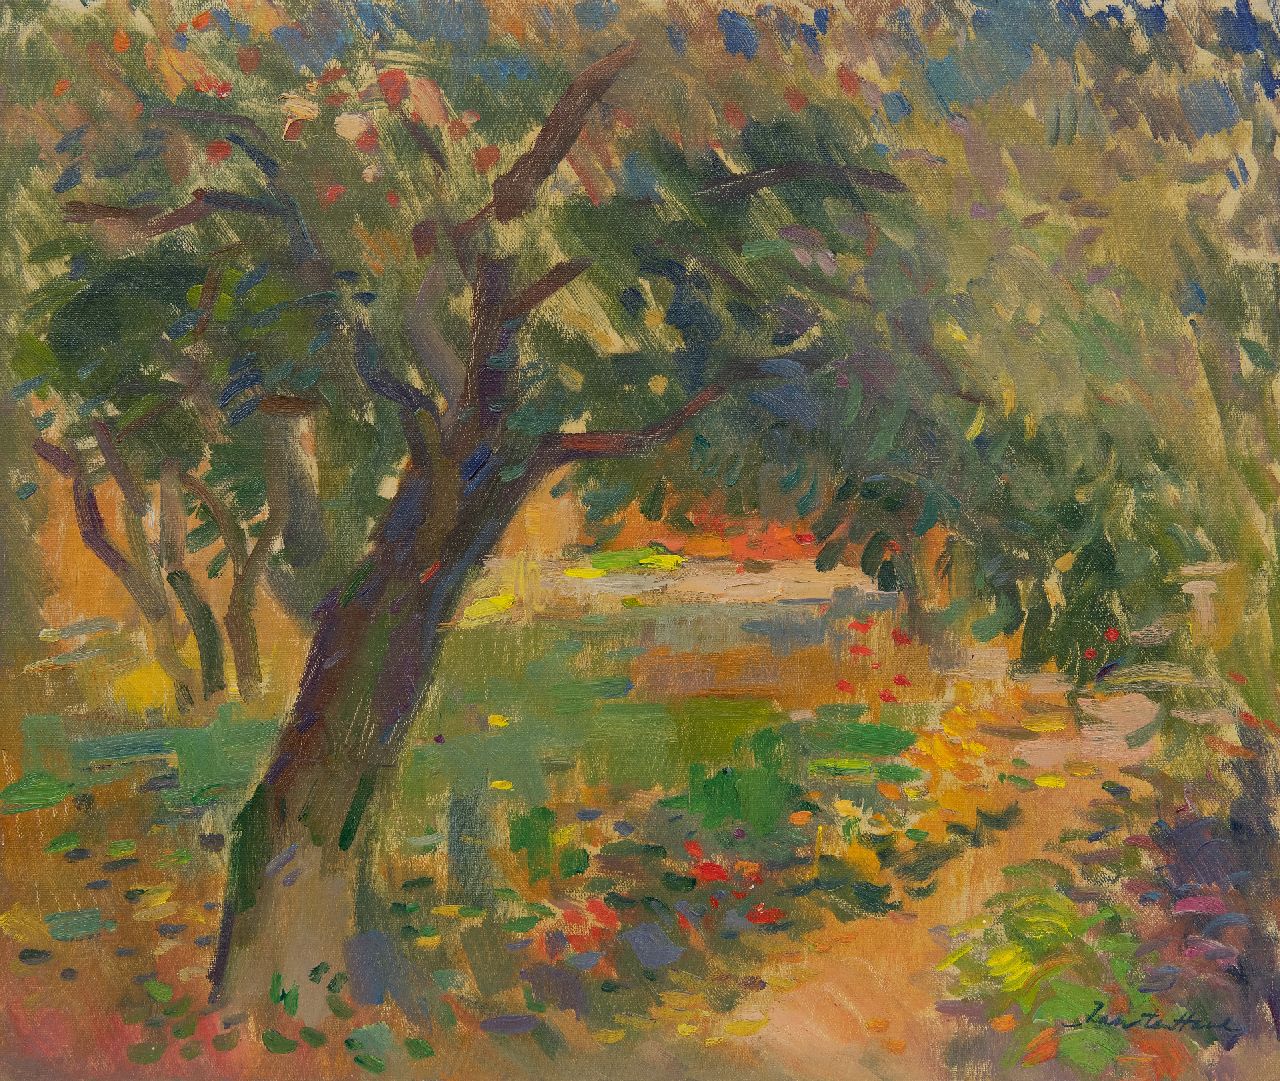 Have J. ten | Jan ten Have, Landscape with tree, oil on canvas 46.1 x 54.2 cm, signed l.r.